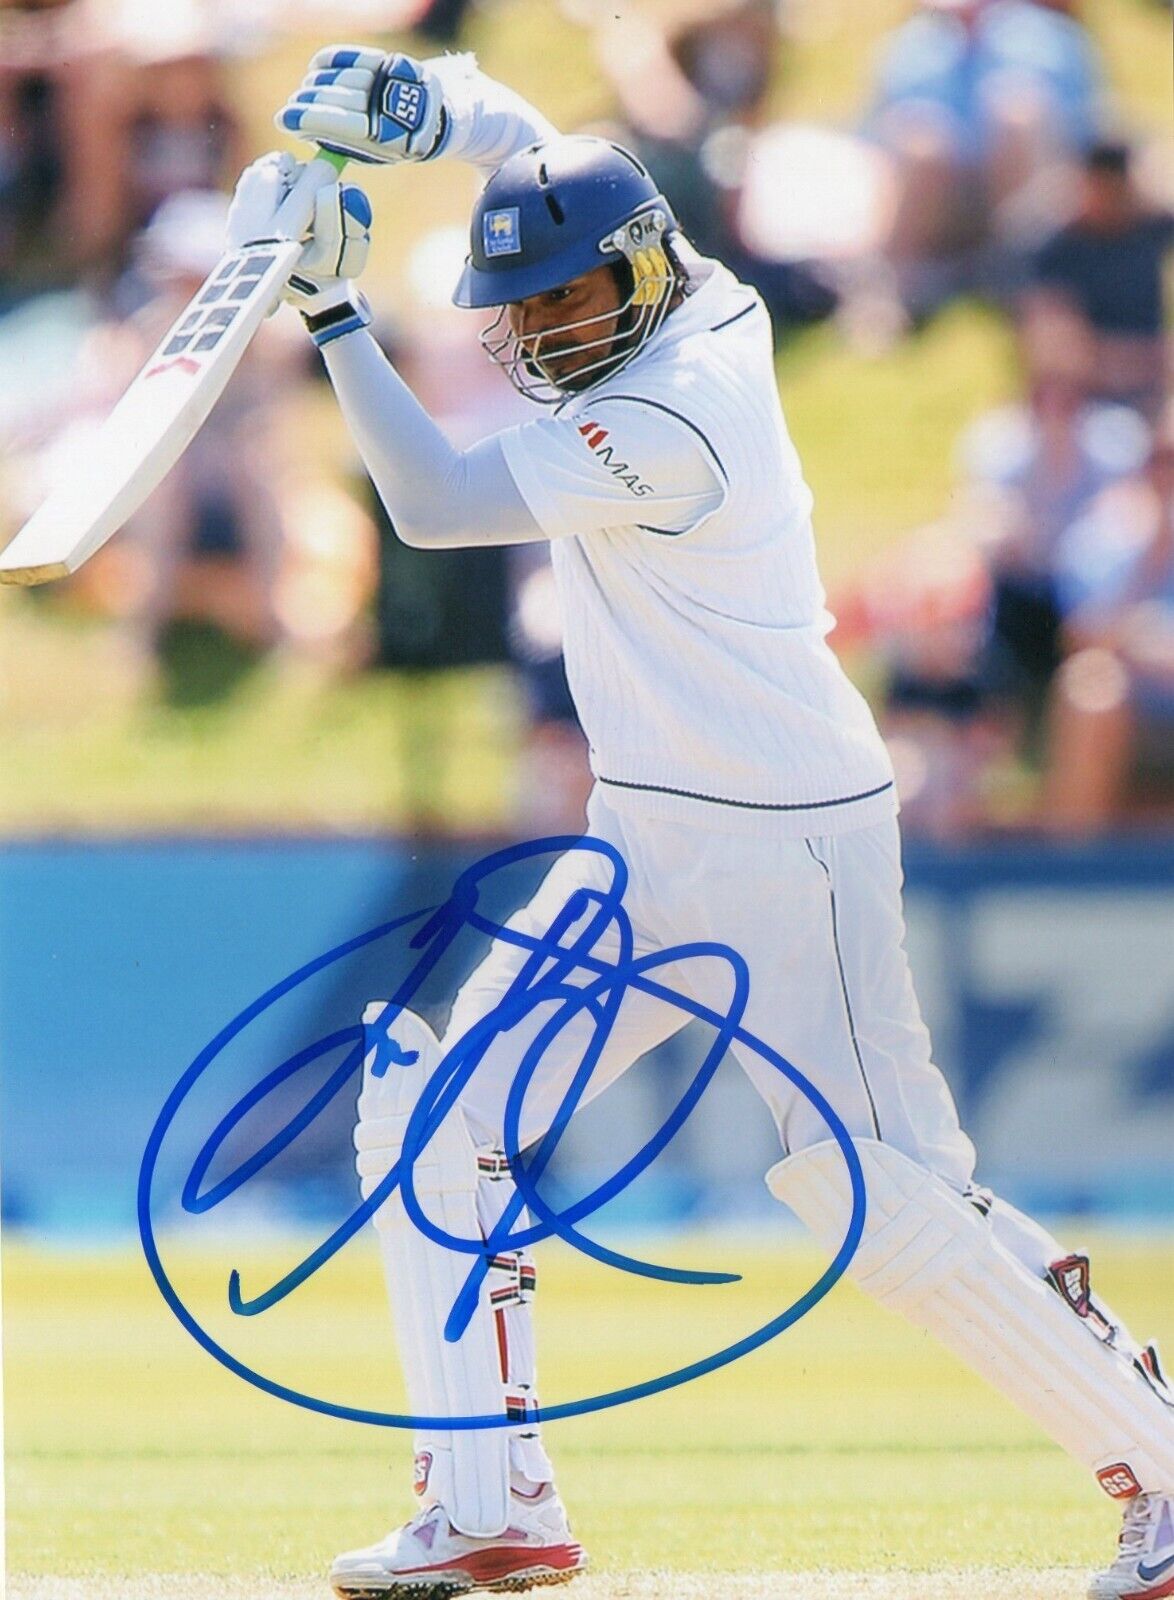 5x7 Inches Original Autographed Photo of Sri Lankan Cricketer Kumar Sangakkara